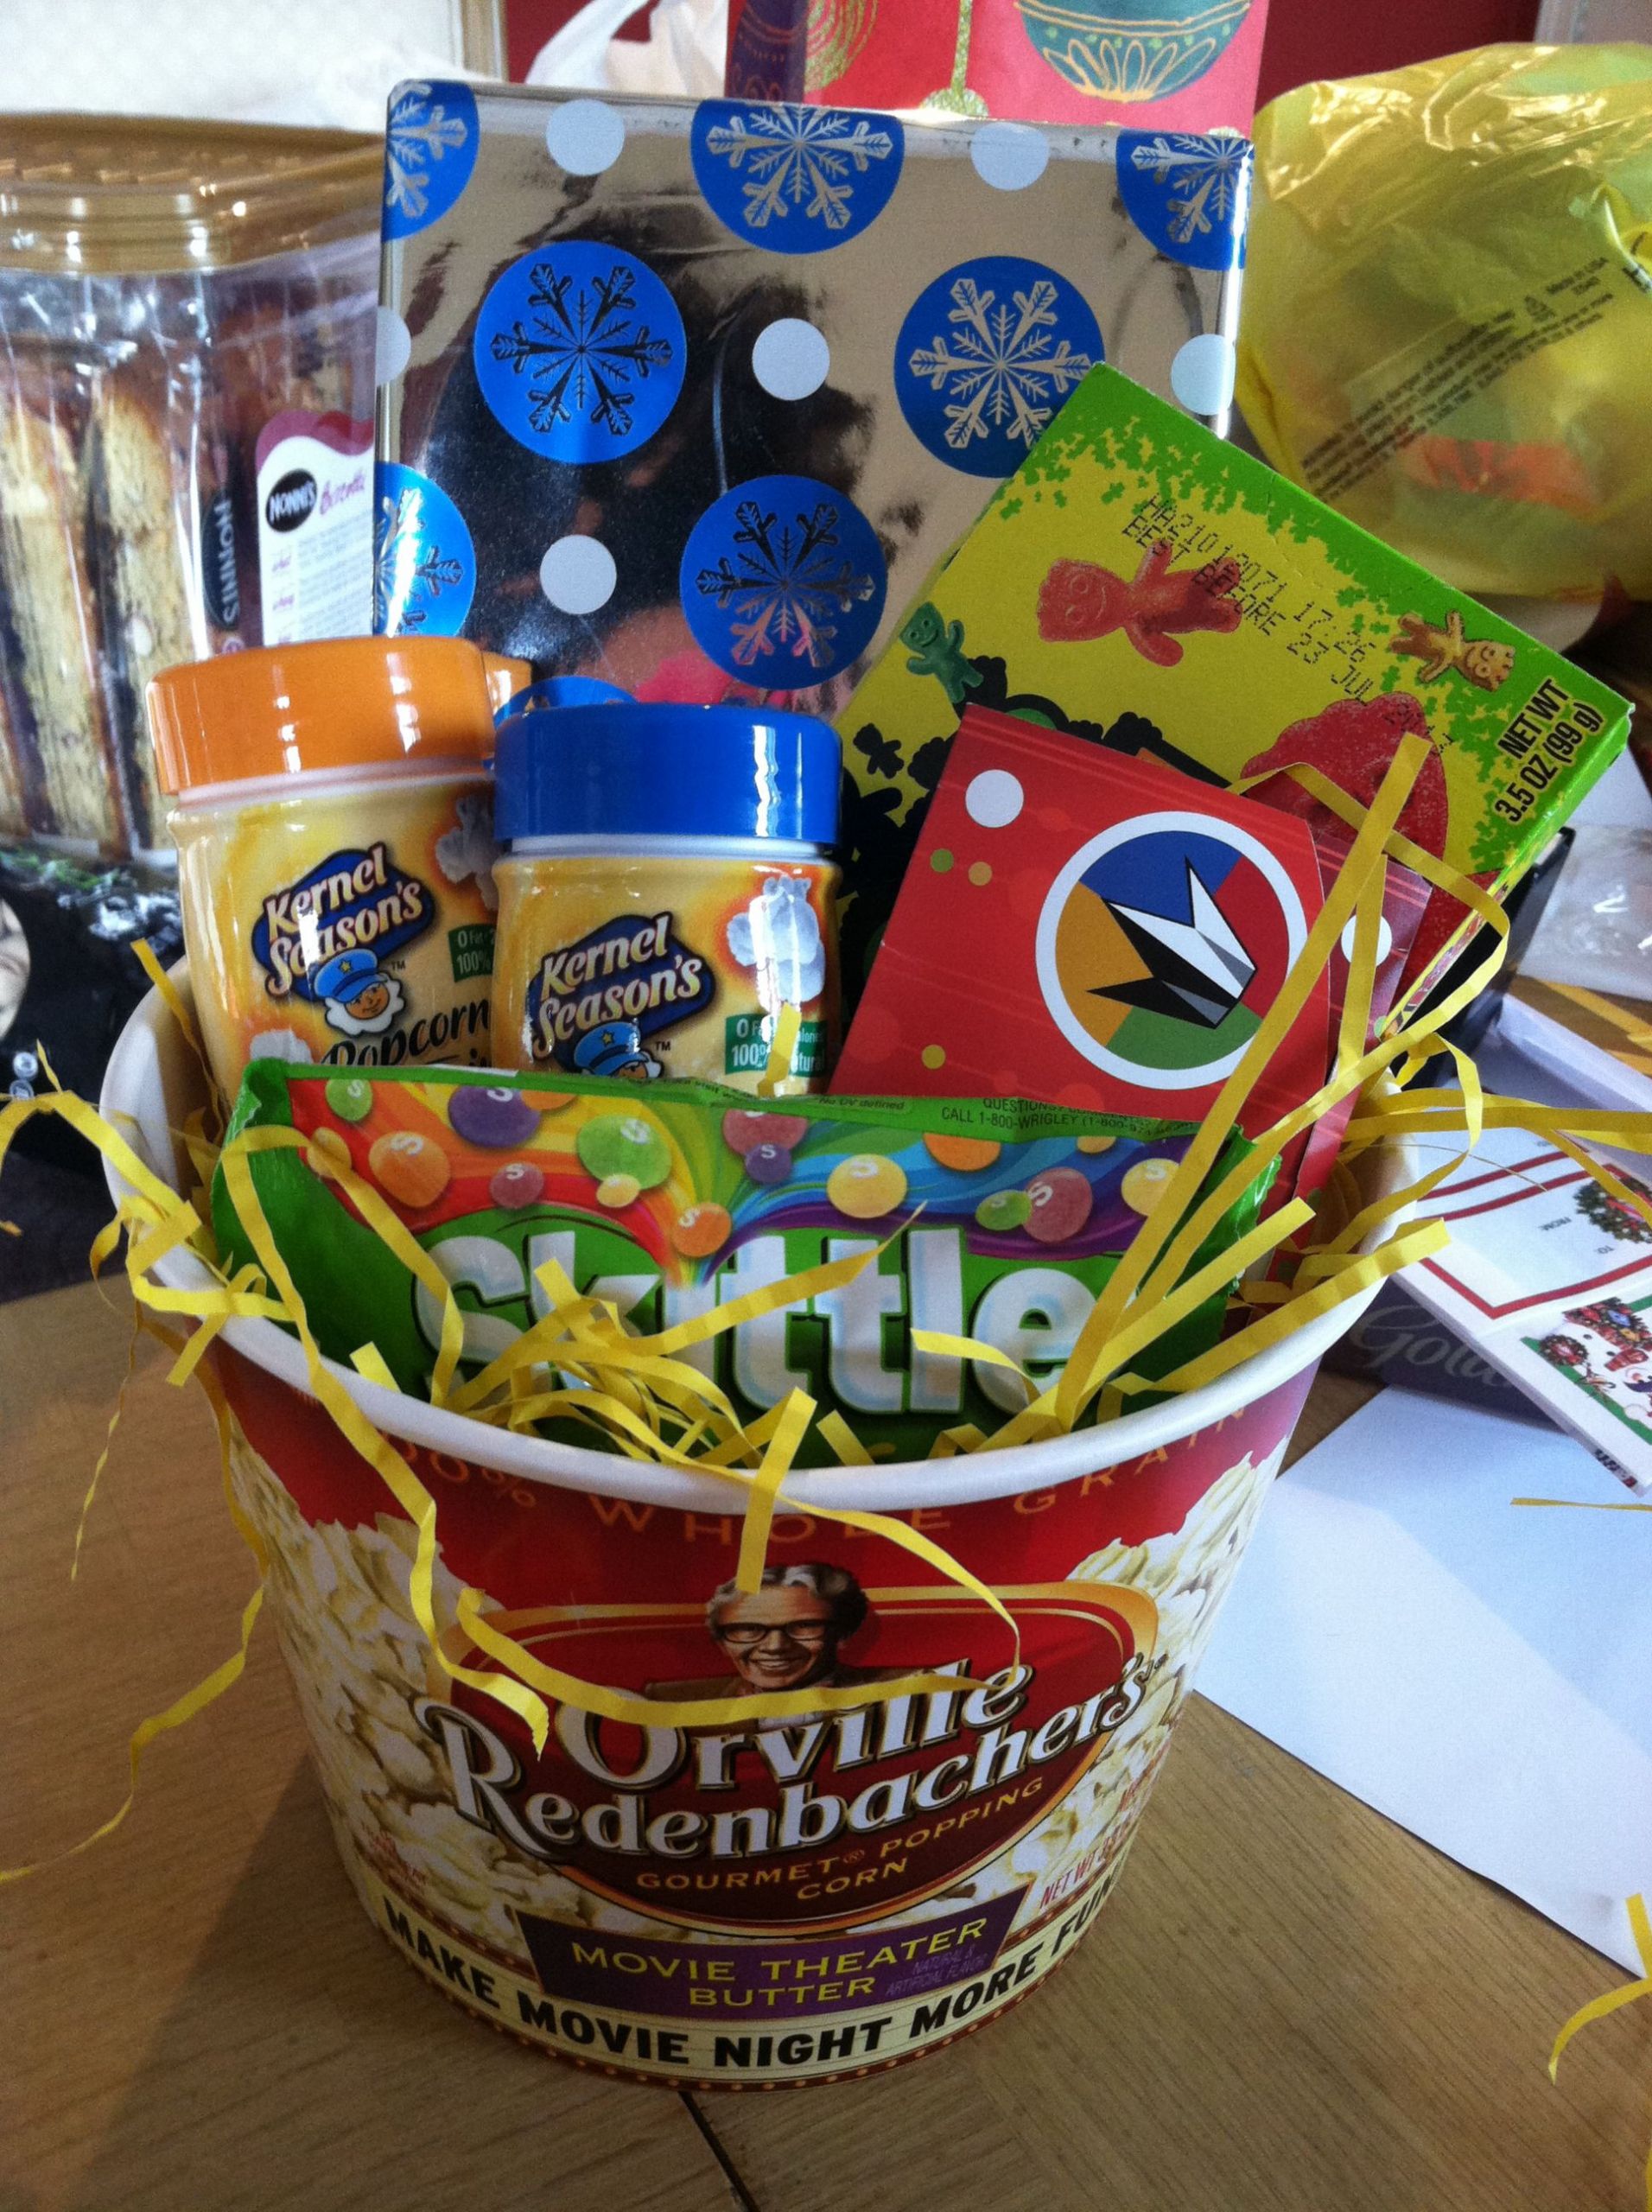 Popcorn Movie Gift Basket Ideas
 Movie Gift Basket Orville popcorn bucket from Tar